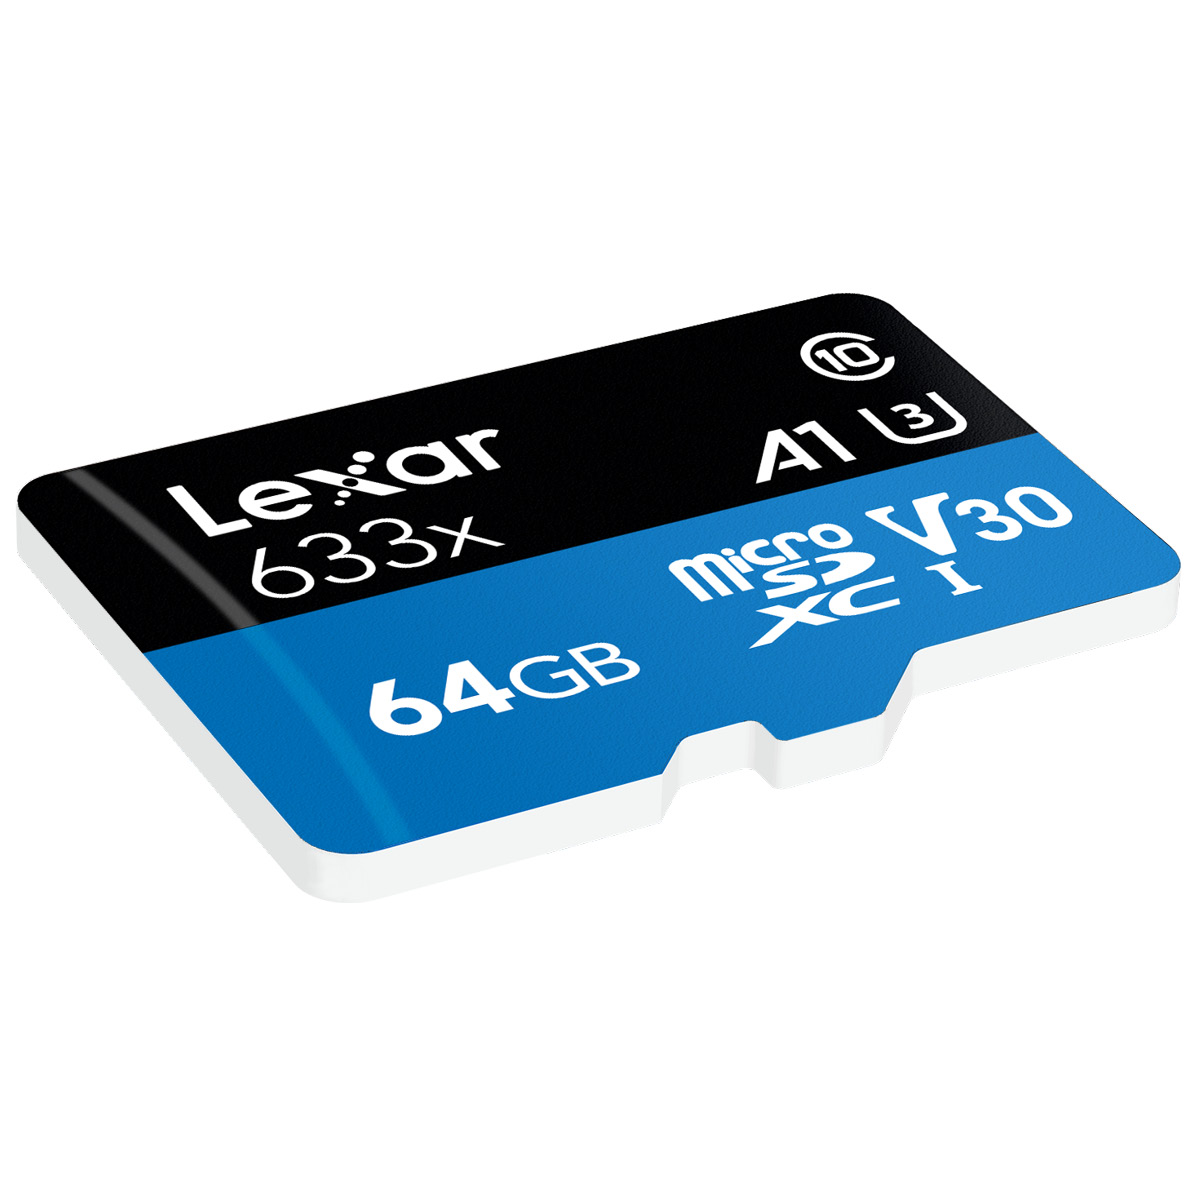 Lexar 64 GB Micro SDXC Blue 633x